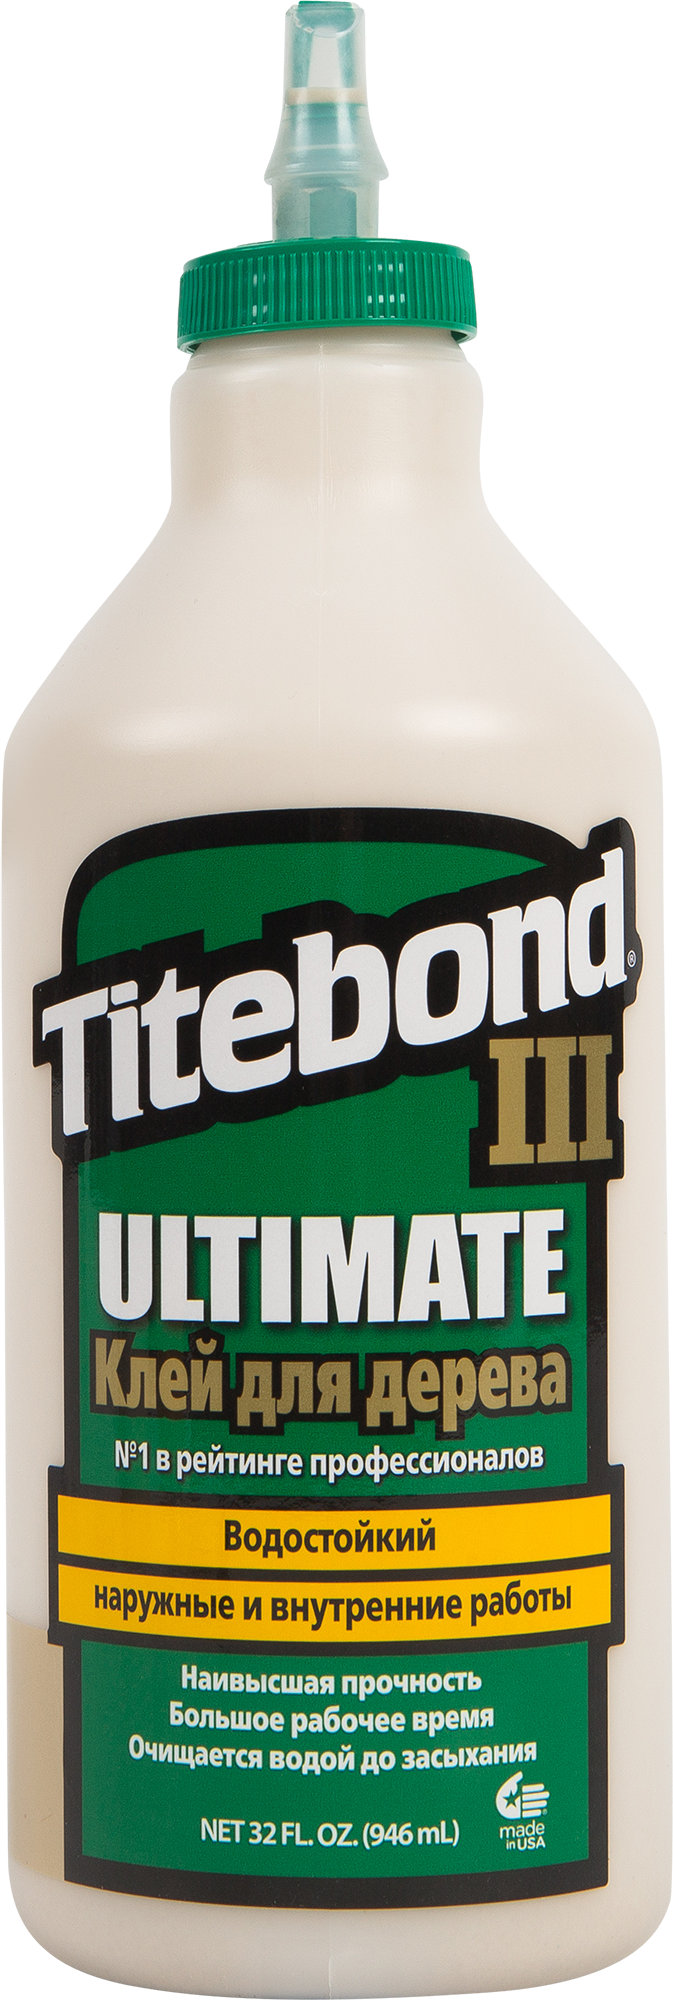 Клей титебонд купить. Клей Titebond Ultimate III Wood Glue,влагостойкий, 946 мл. Клей Titebond III Ulimate 1415. Клей Titebond III Ulimate. Клей повышенной влагостойкости Titebond III Ultimate.